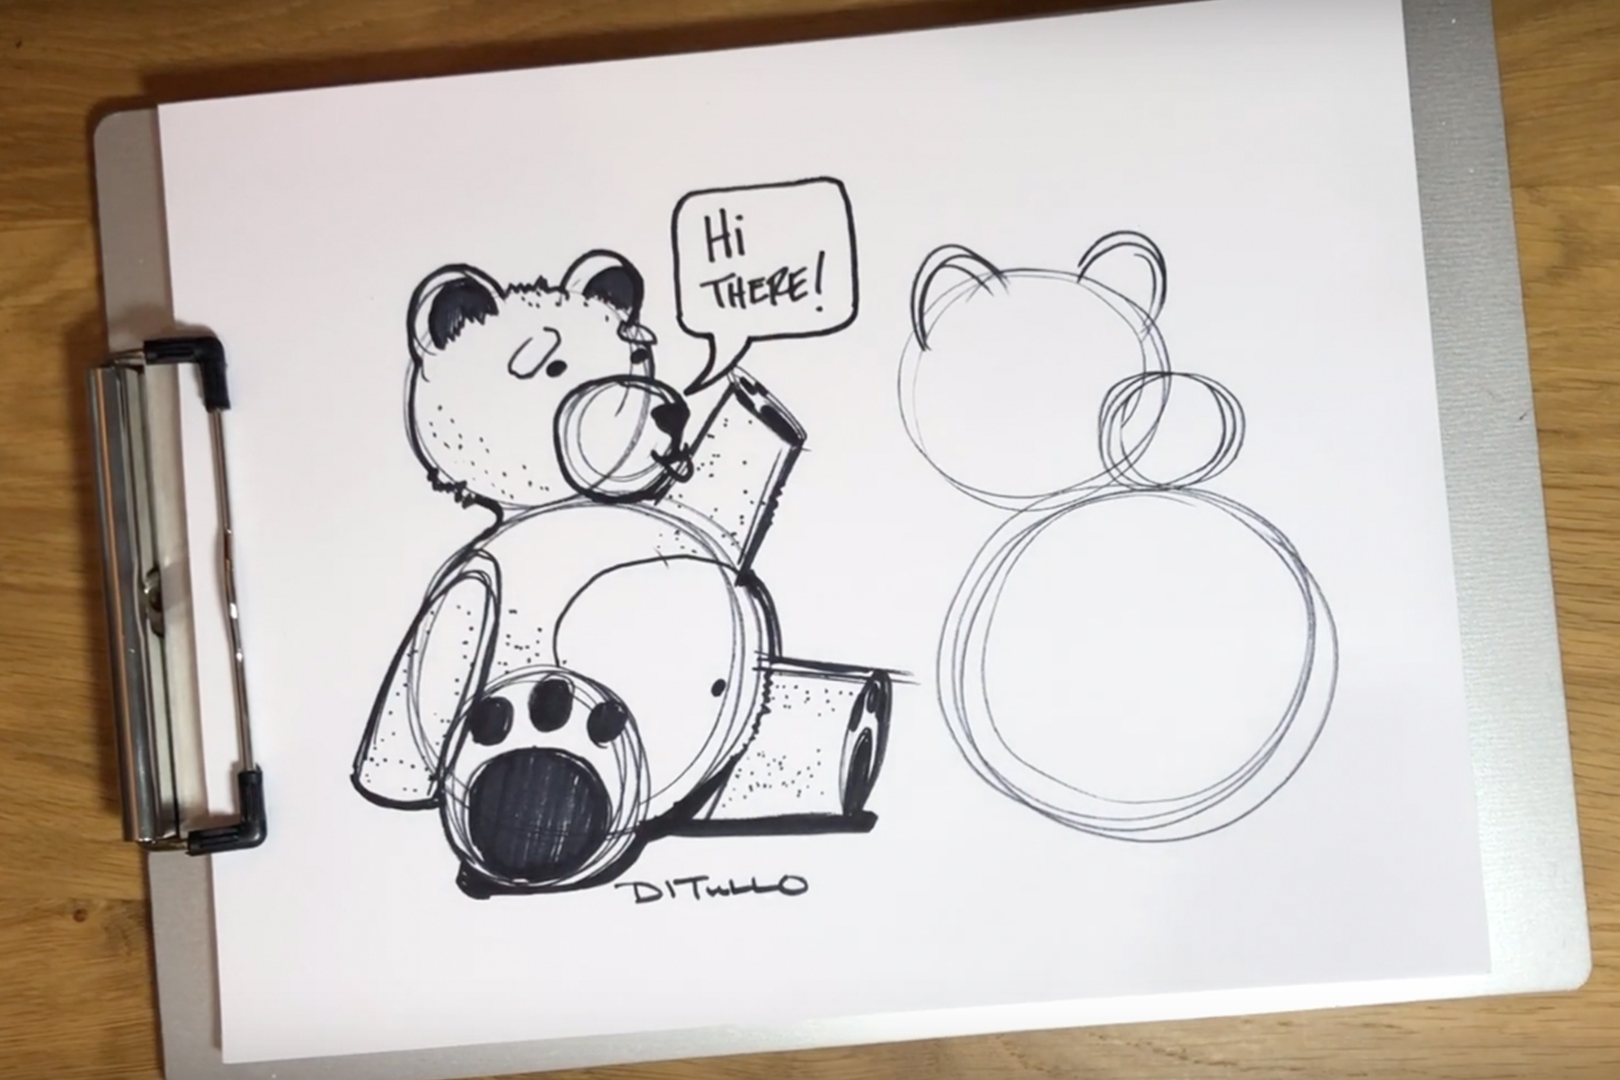 Michael DiTullo's final sketch of a teddy bear.